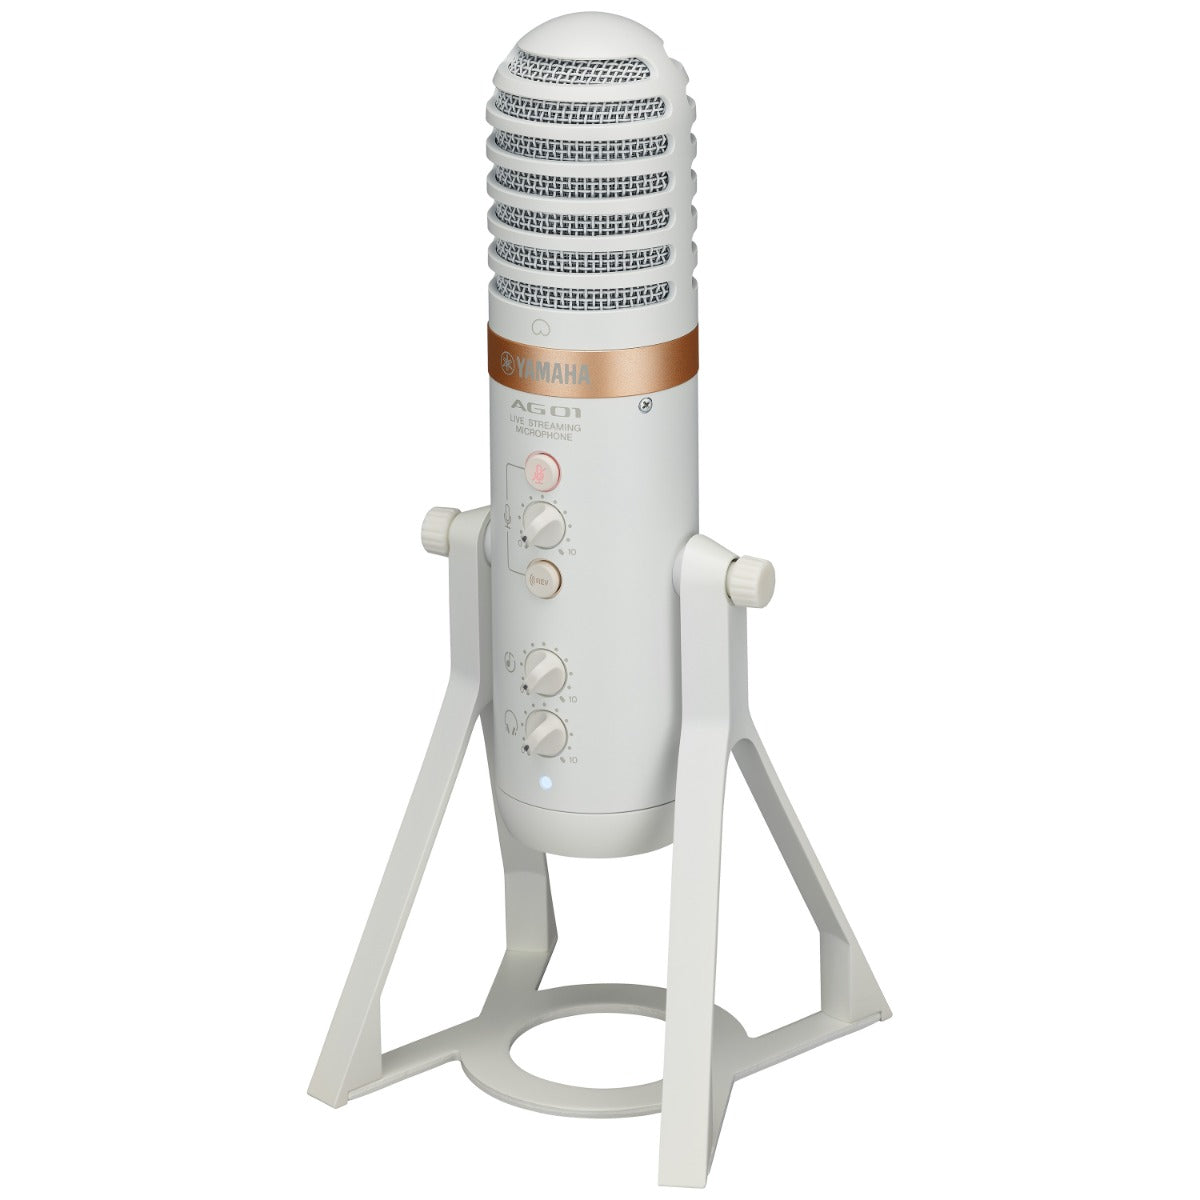 Yamaha AG01 Live Streaming USB Microphone - White view 1